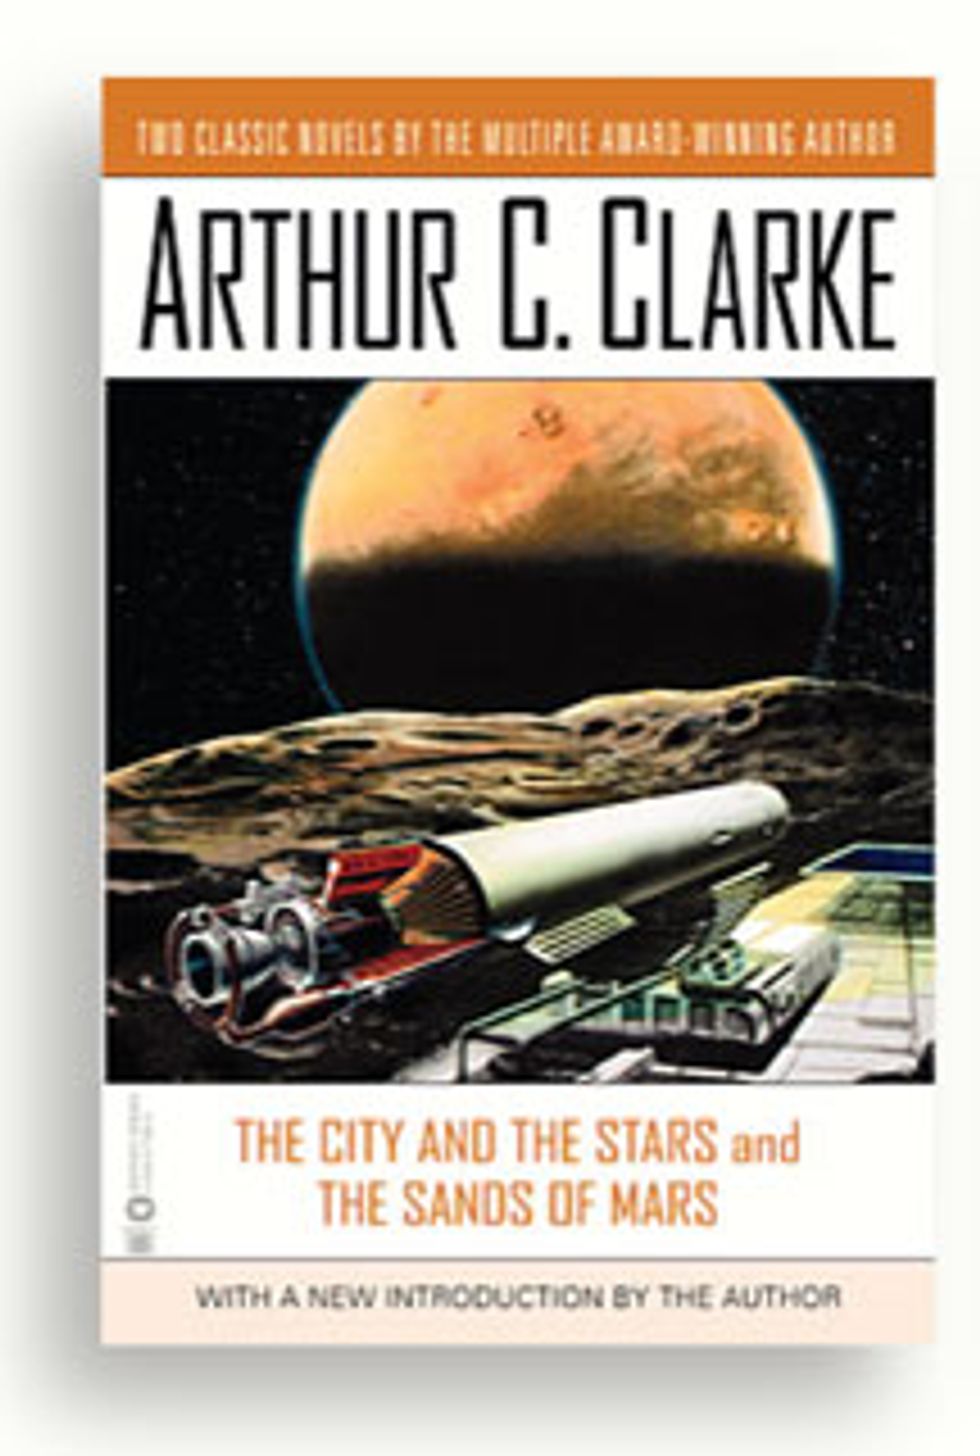 Arthur C. Clarke book cover